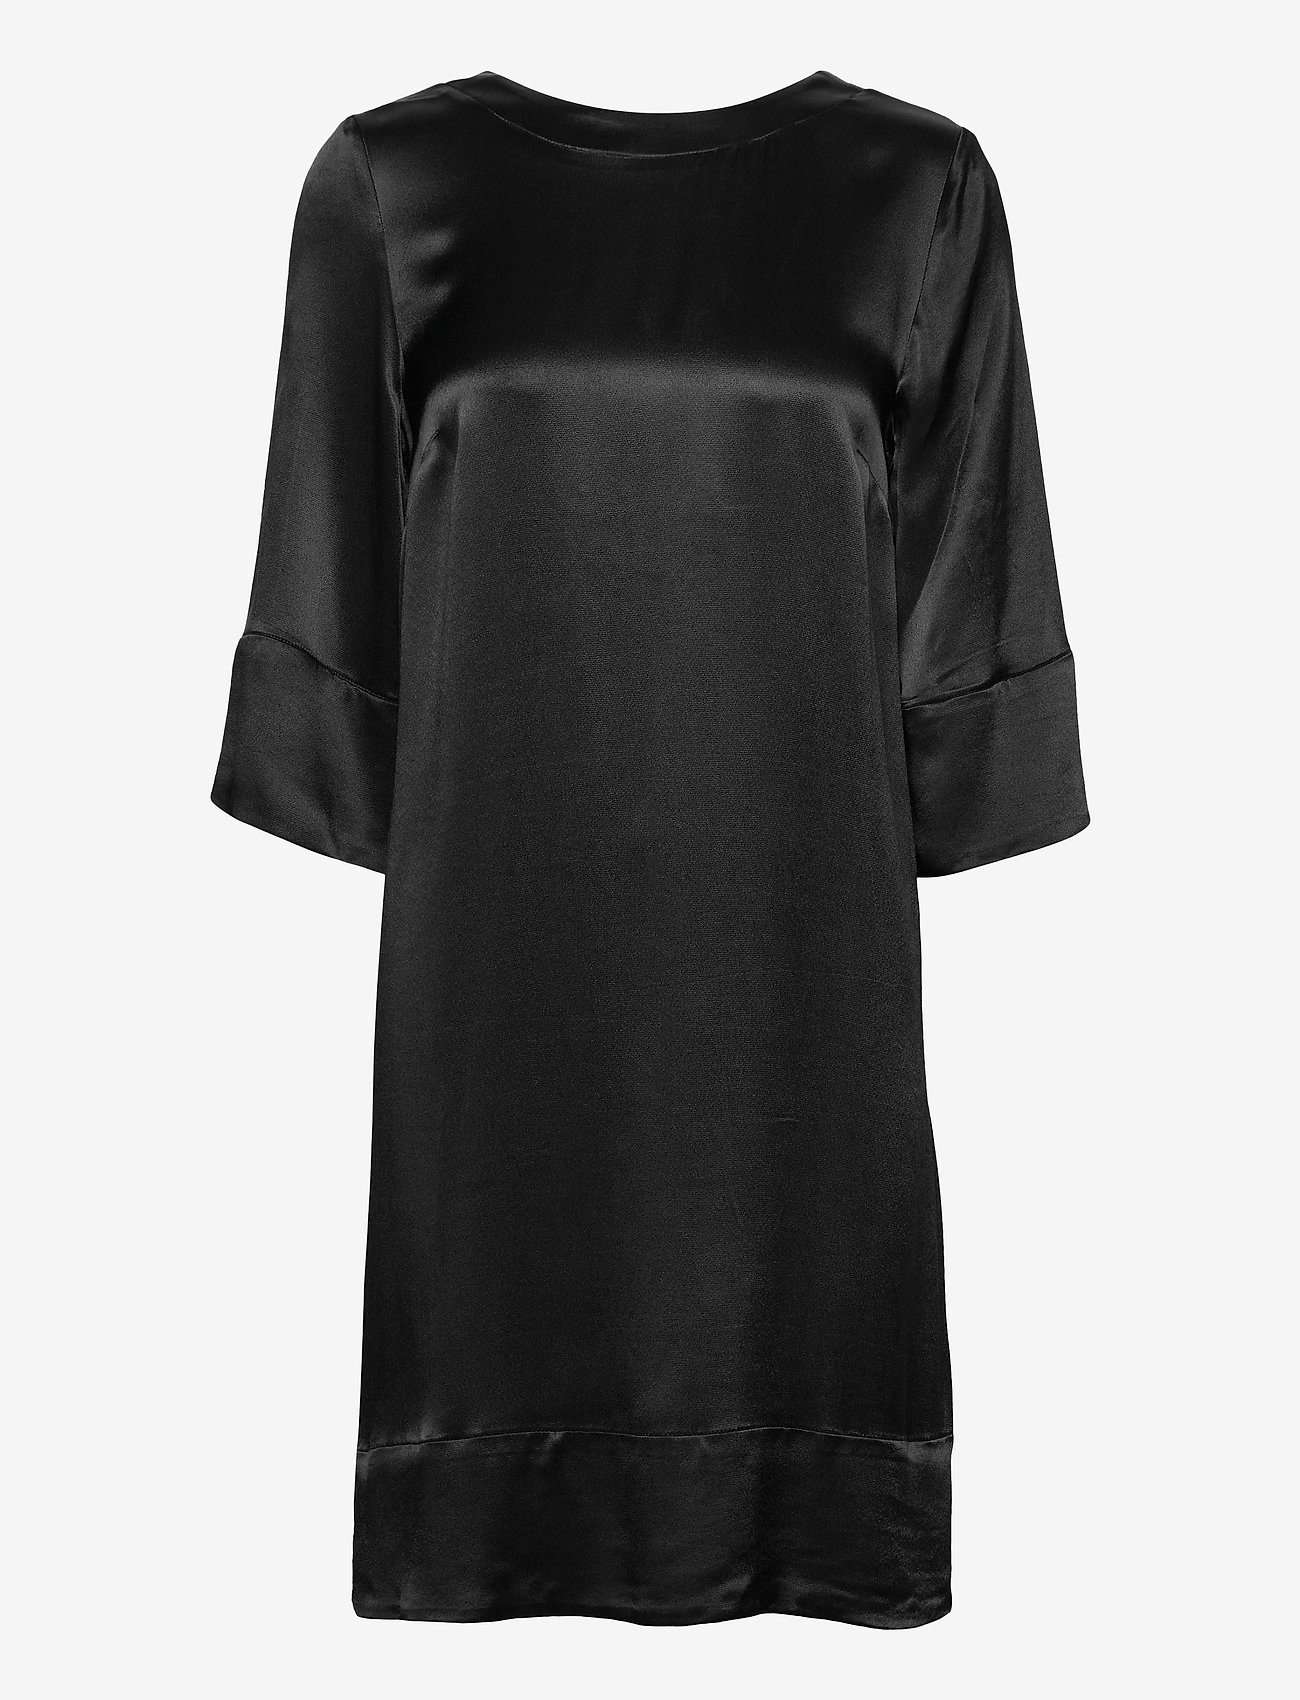 Morris Lady - Aurore Dress - korta klänningar - black - 0